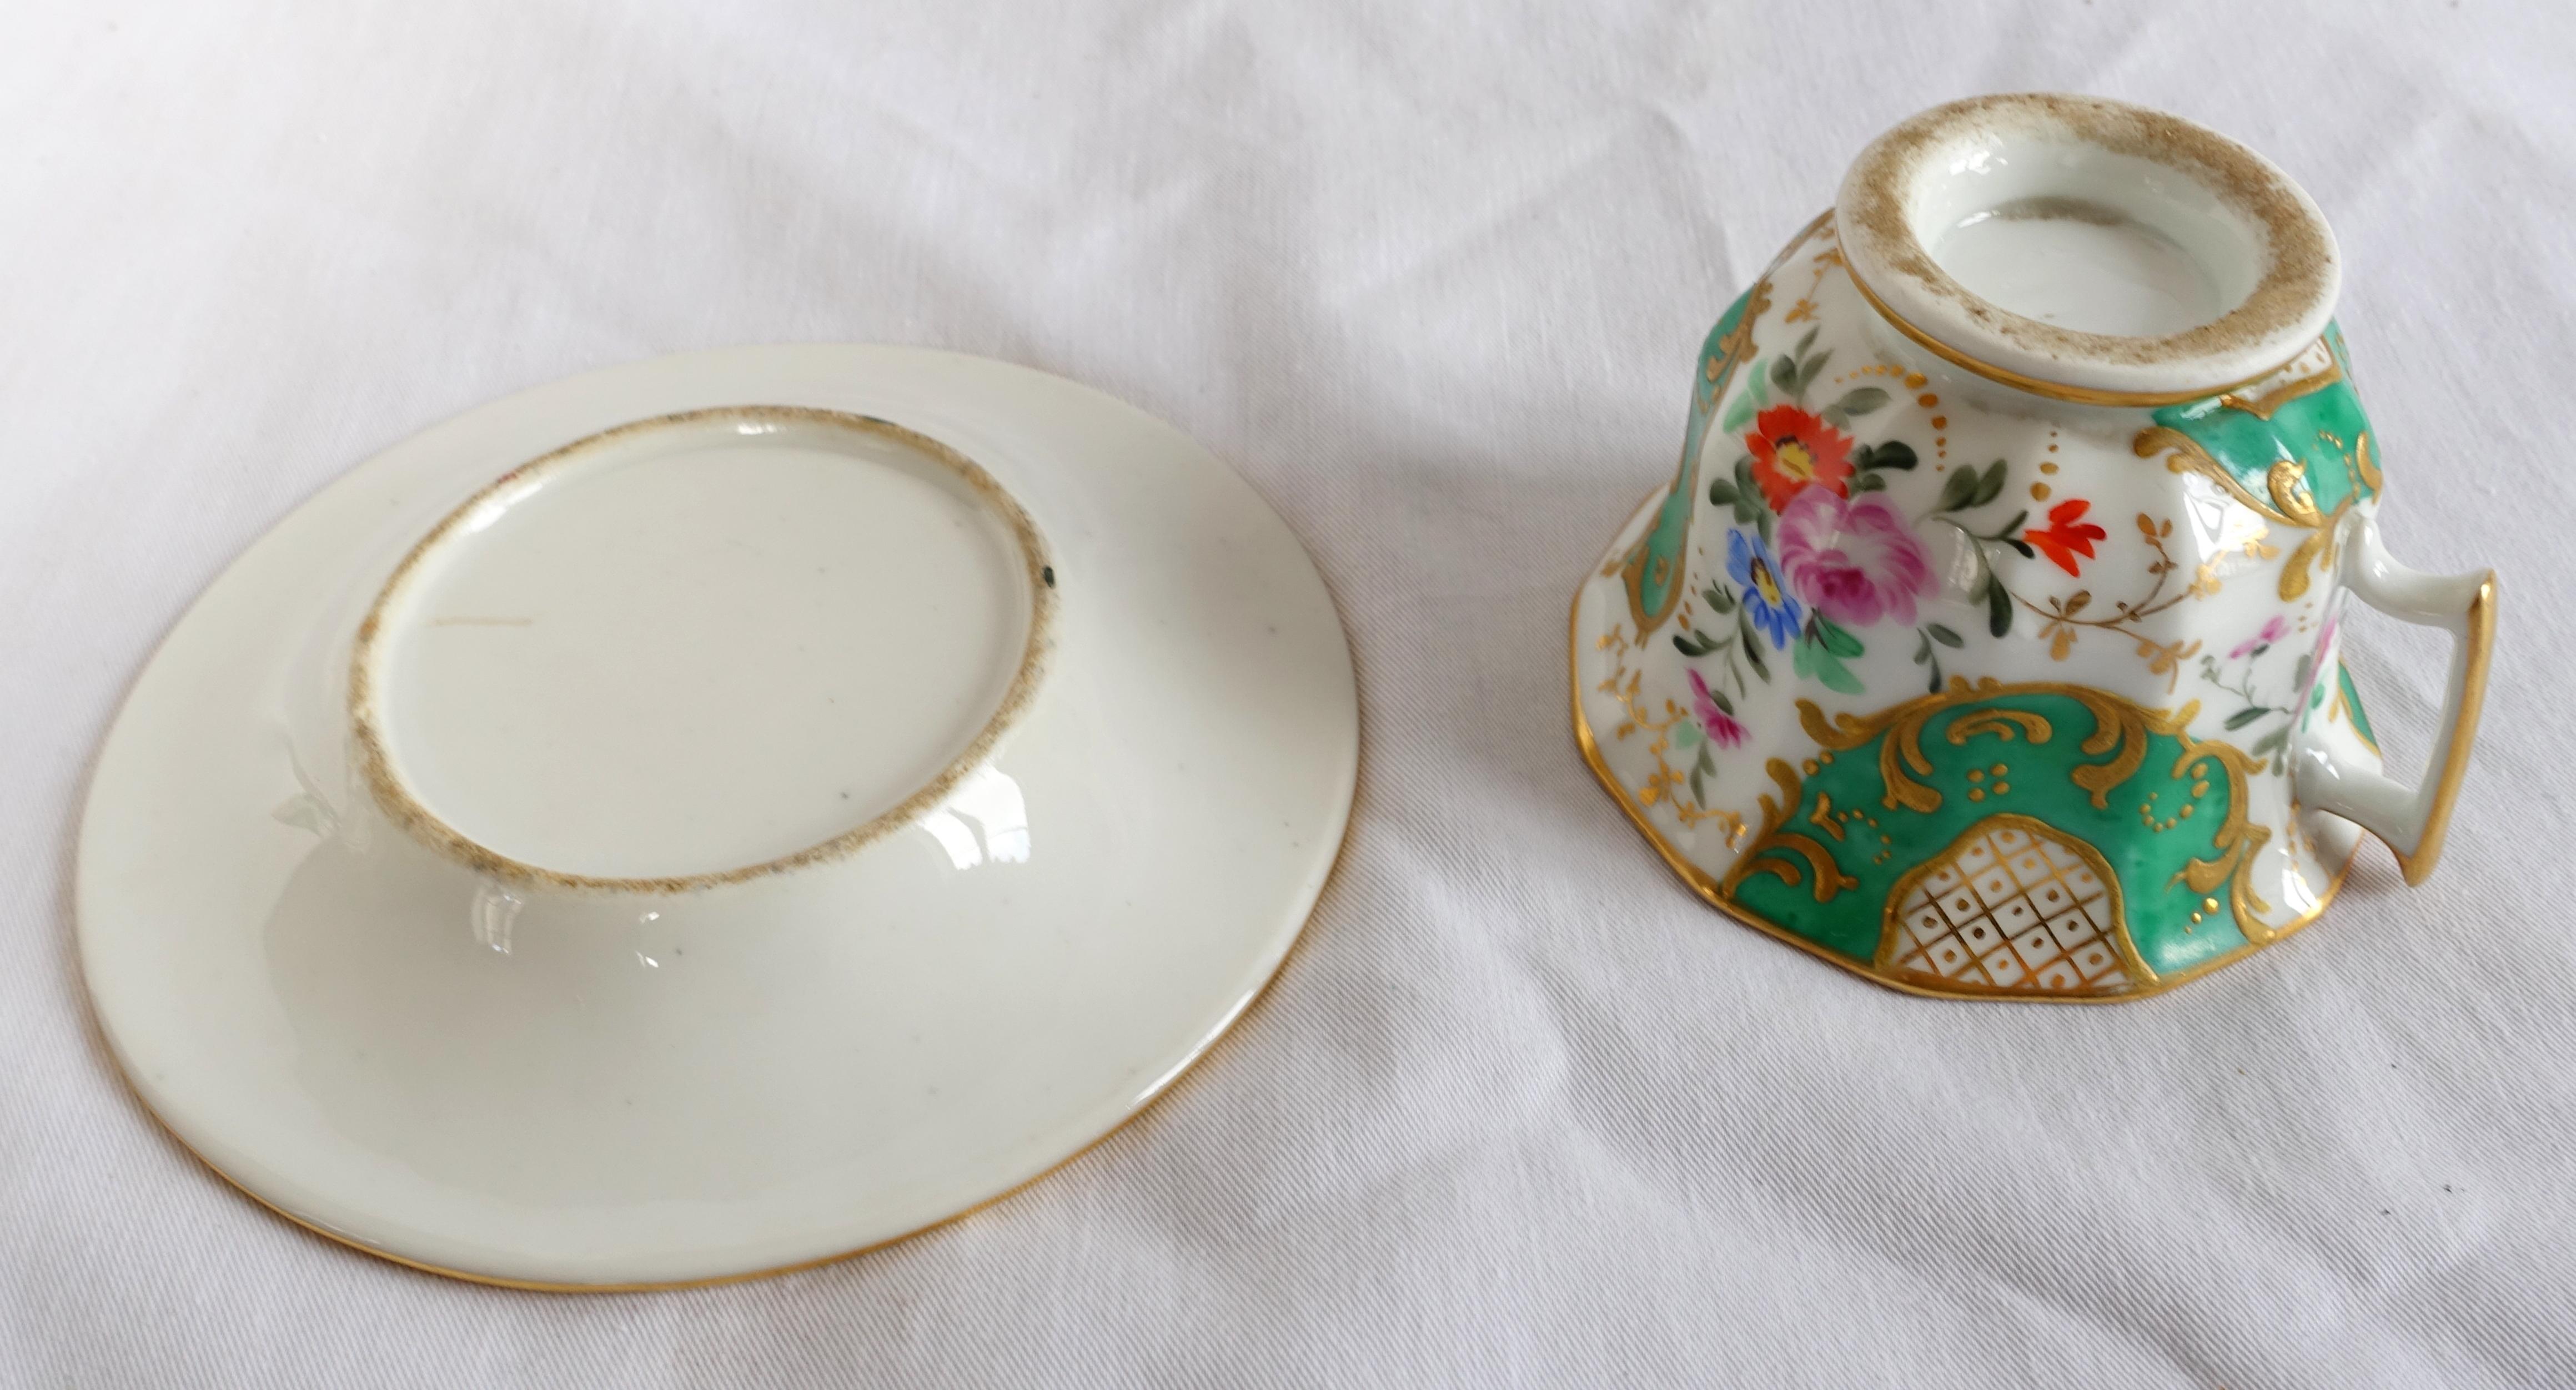 Antique French Paris porcelain coffee set for 6 - cups & saucers - 19th century 4